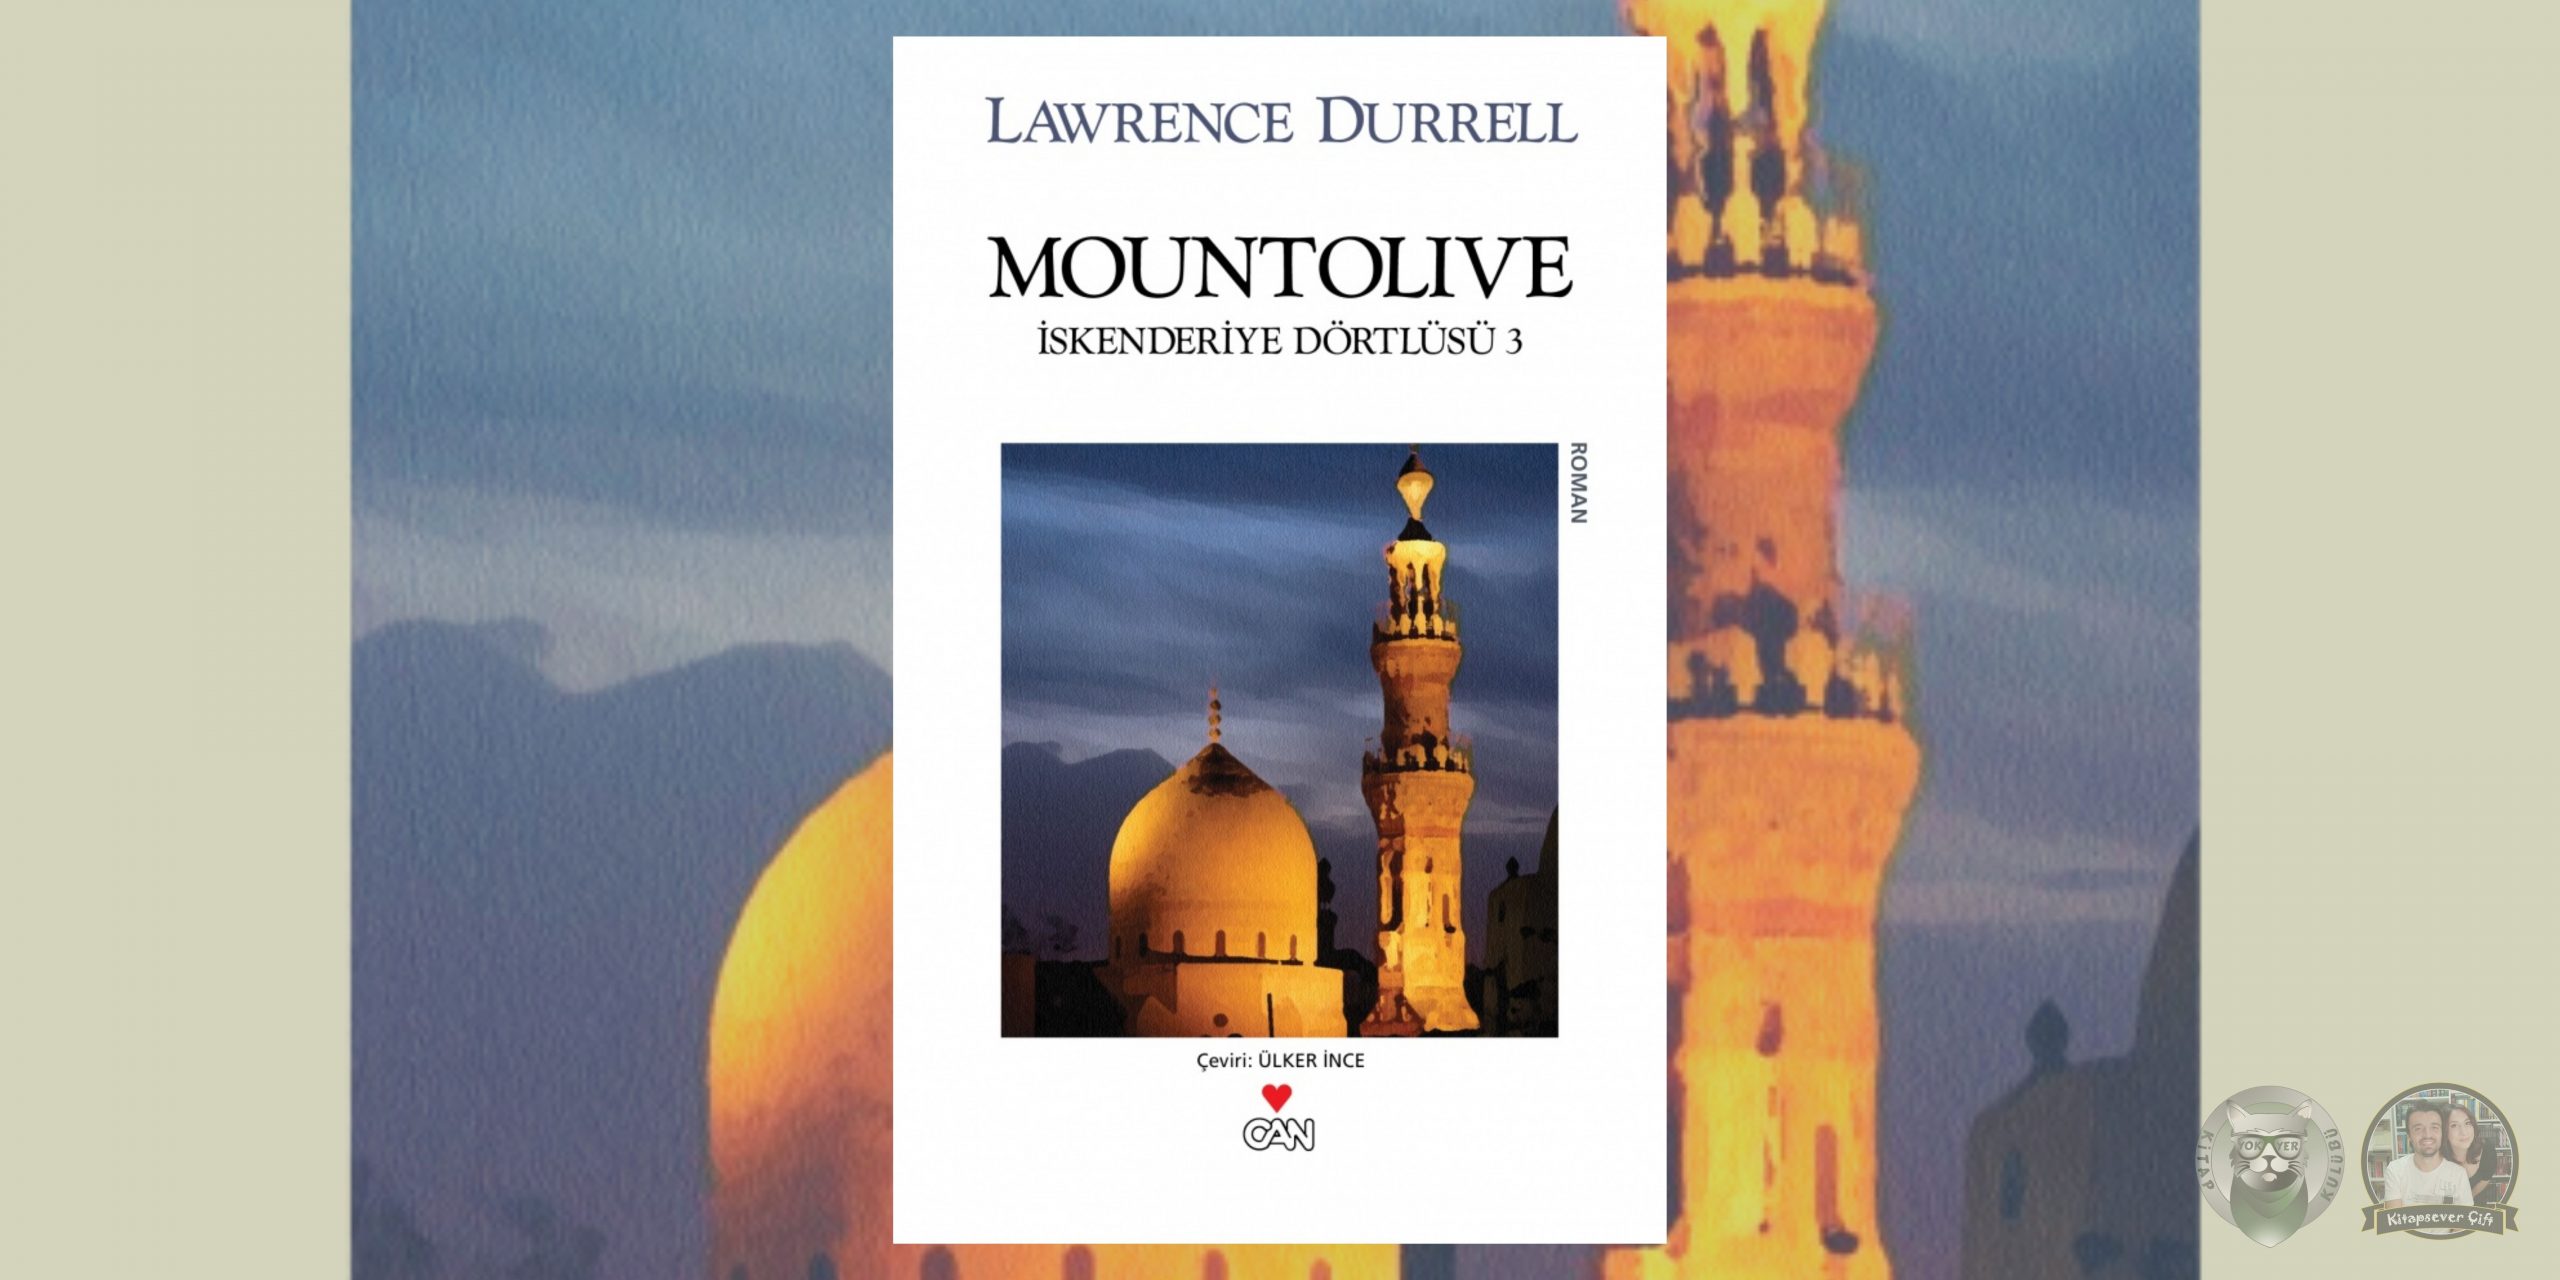 lawrence durrell- i̇skenderiye dörtlüsü 3 – mountolive scaled